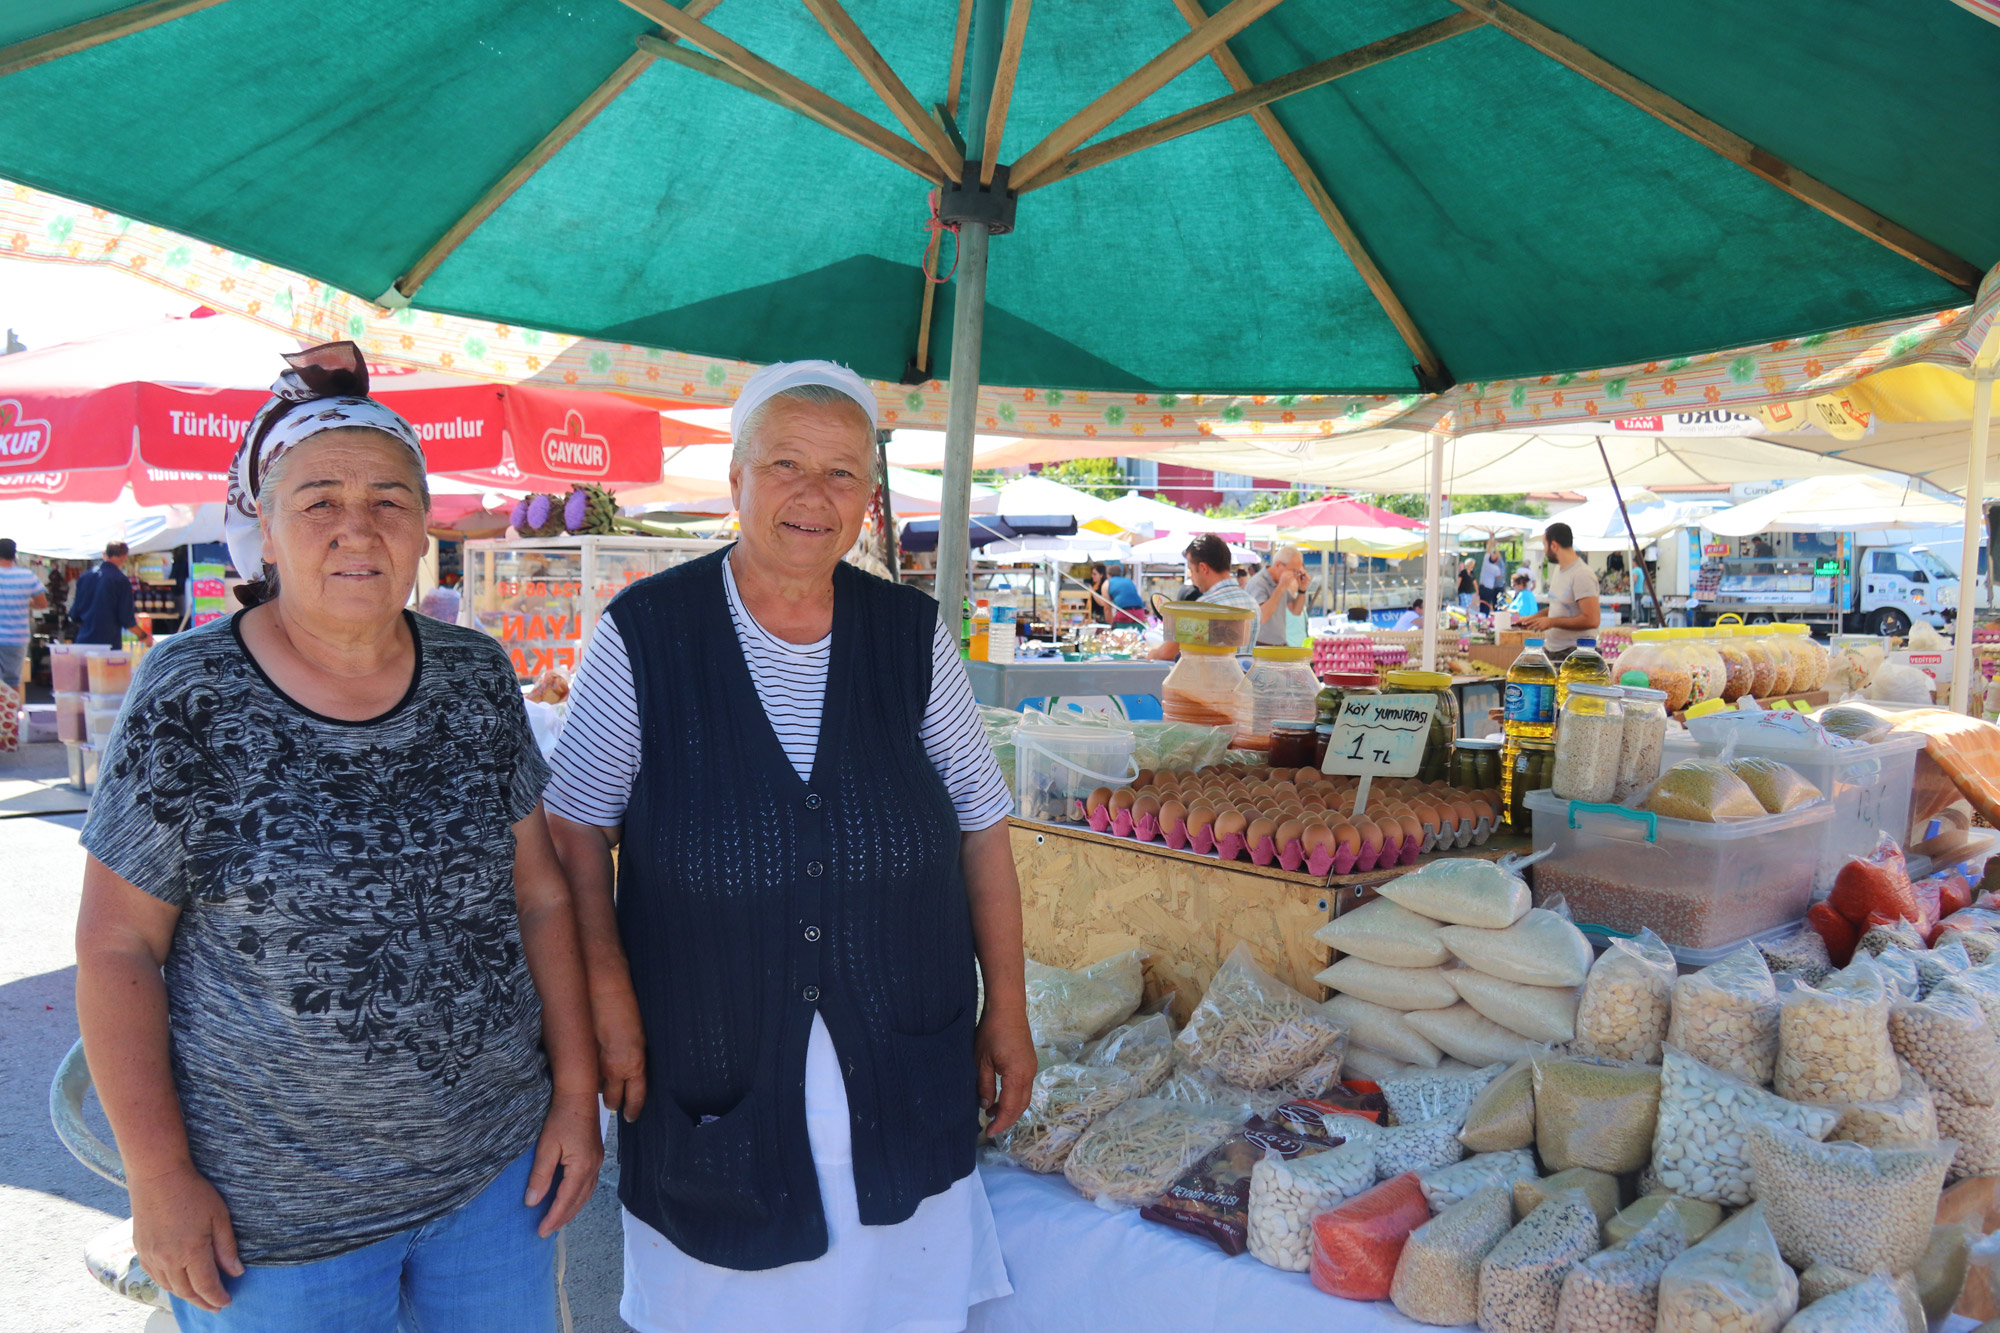 Turkije reisverslag: Laatste dag in Alaçatı - Turkse verkoopsters op de markt van Alaçatı